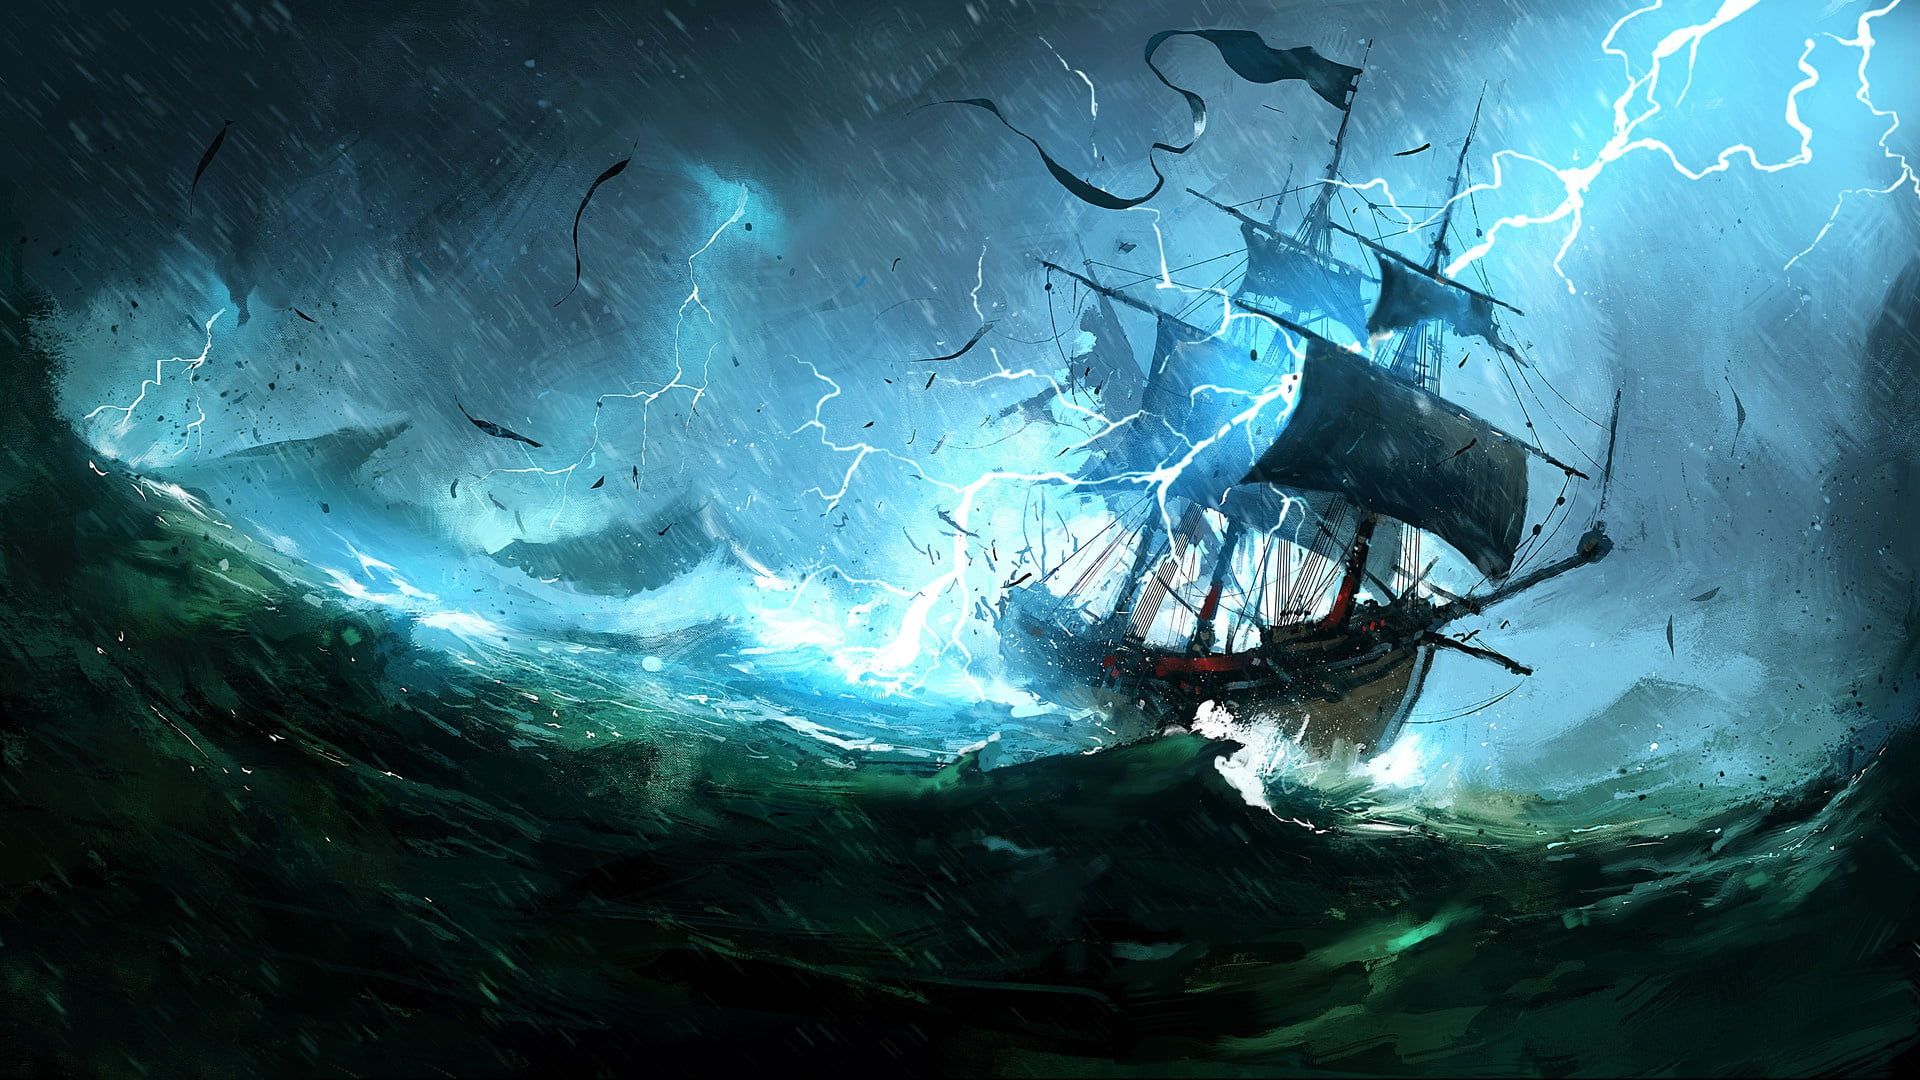 HD wallpaper: ship on sea during thunderstorm animated wallpaper, fantasy art